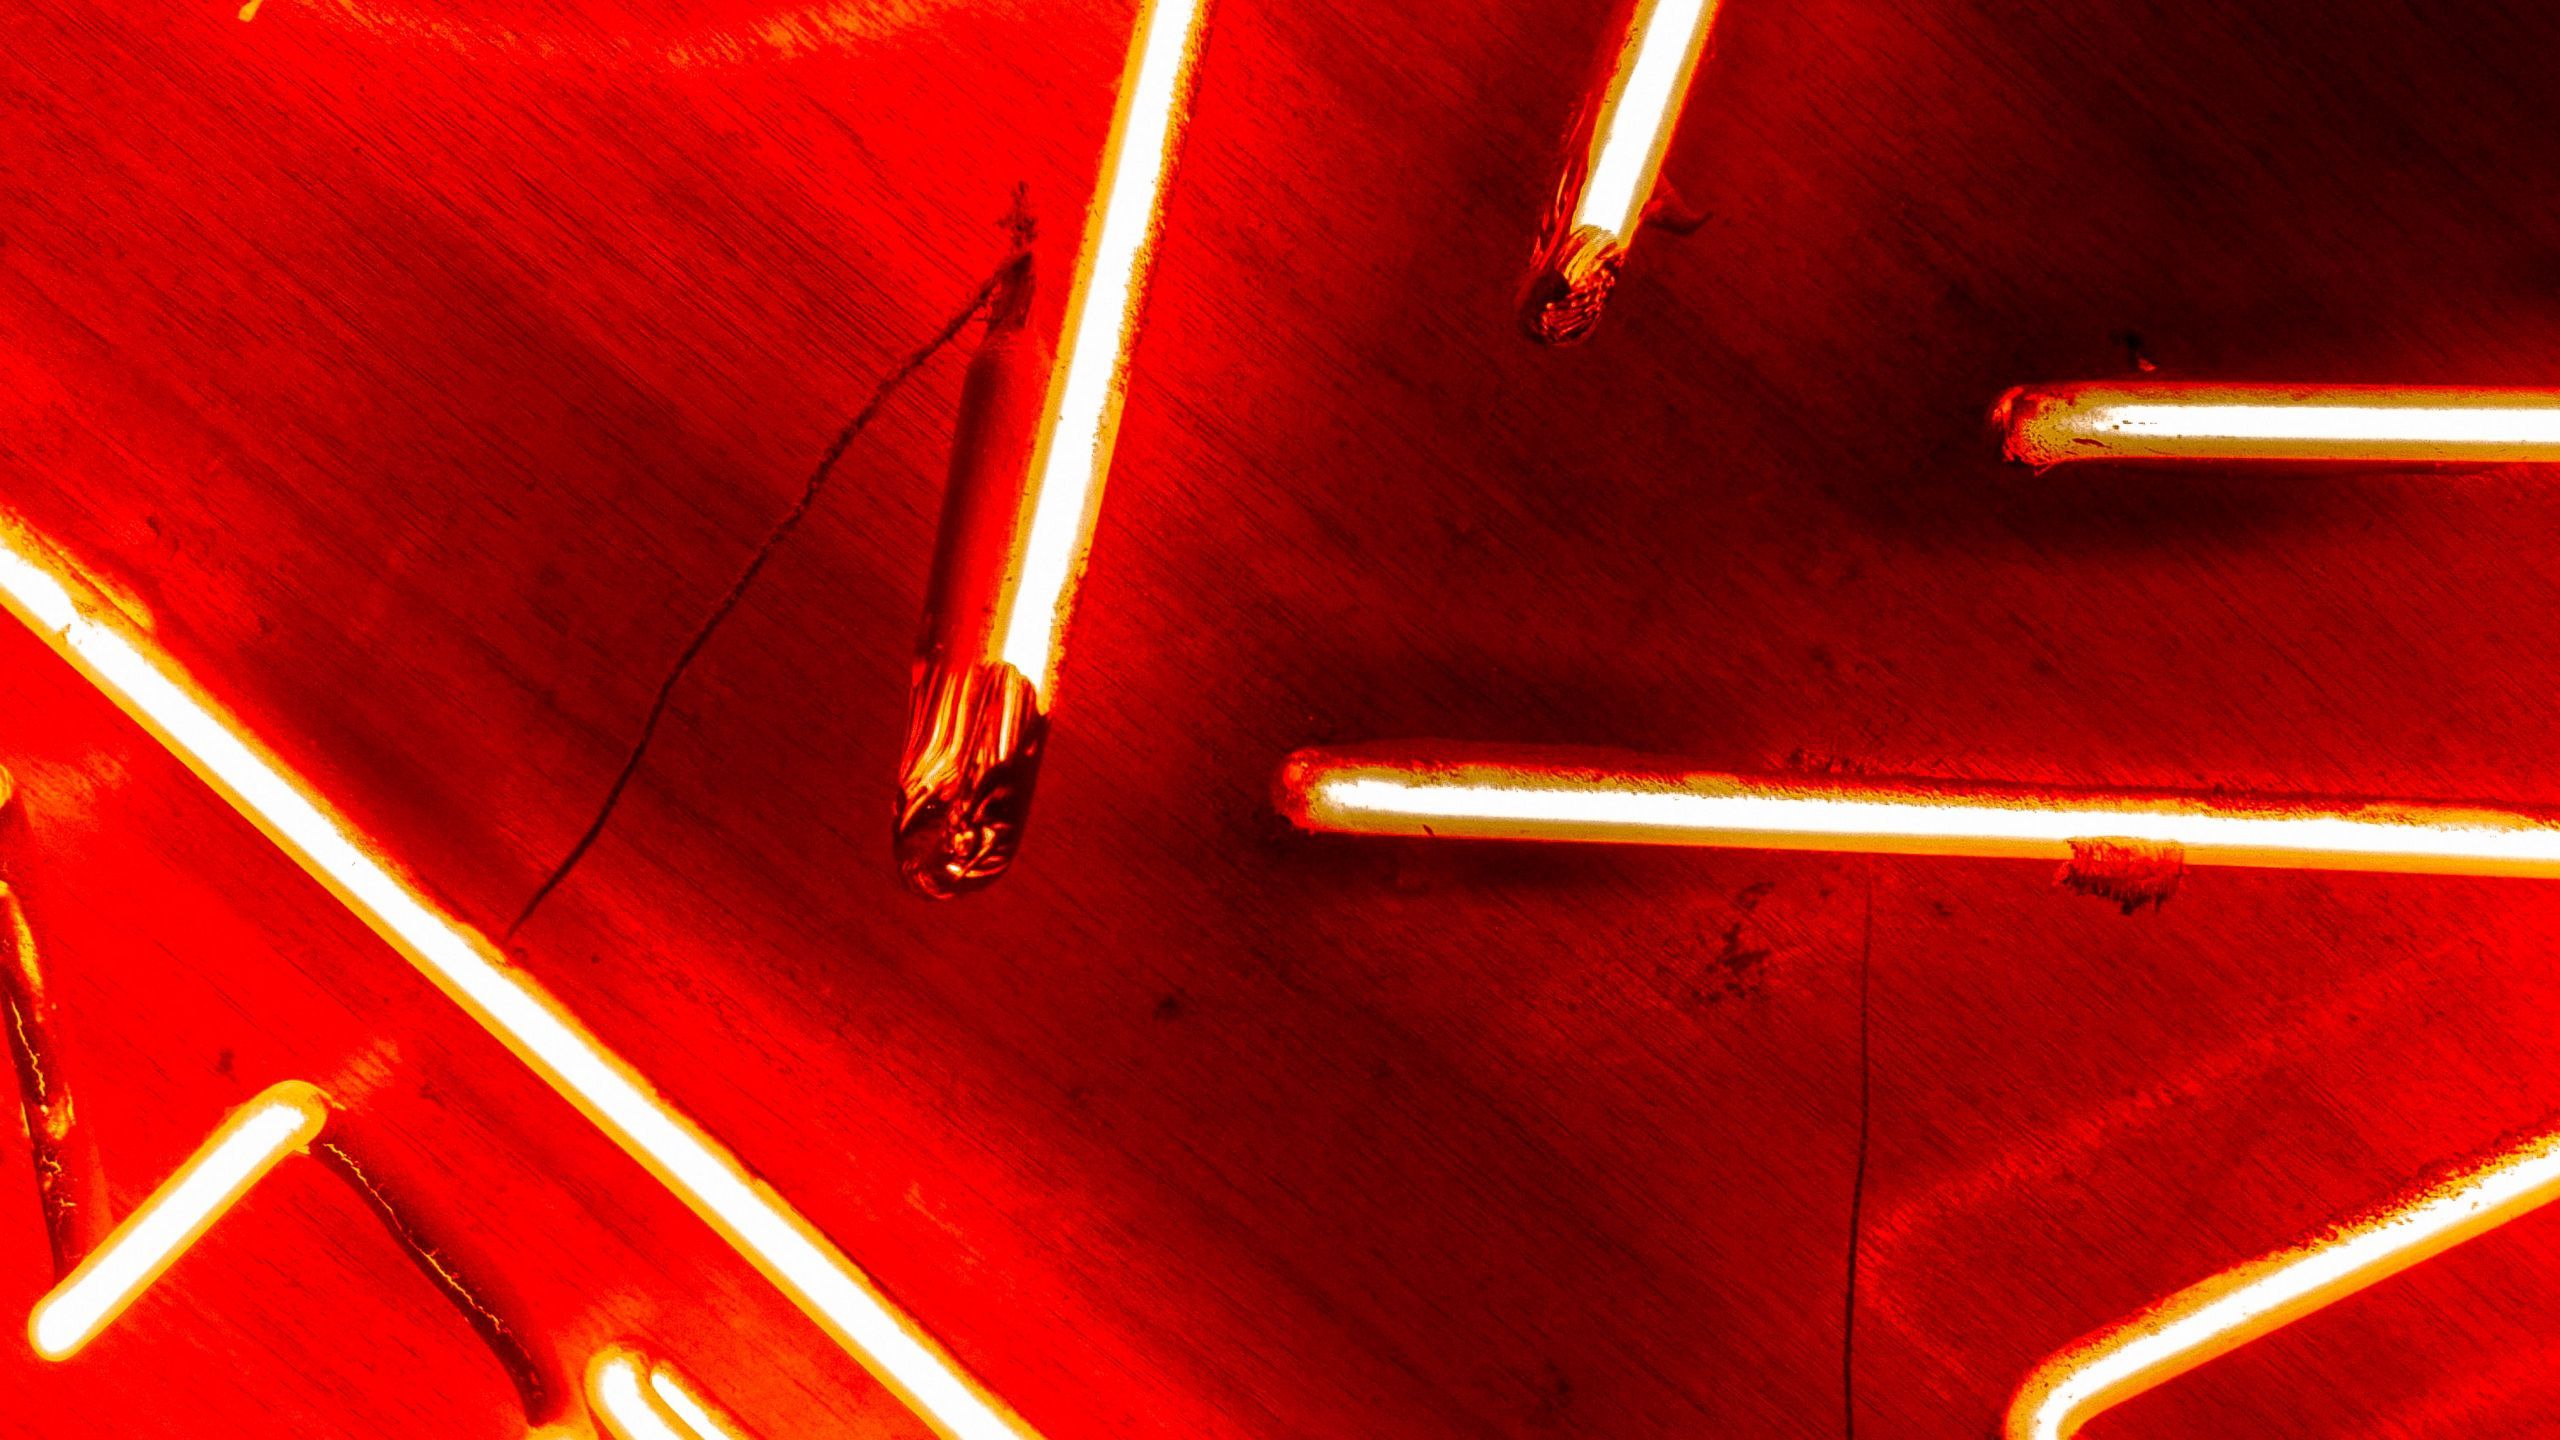 Download wallpaper 2560x1440 neon, lamps, red, glow, light